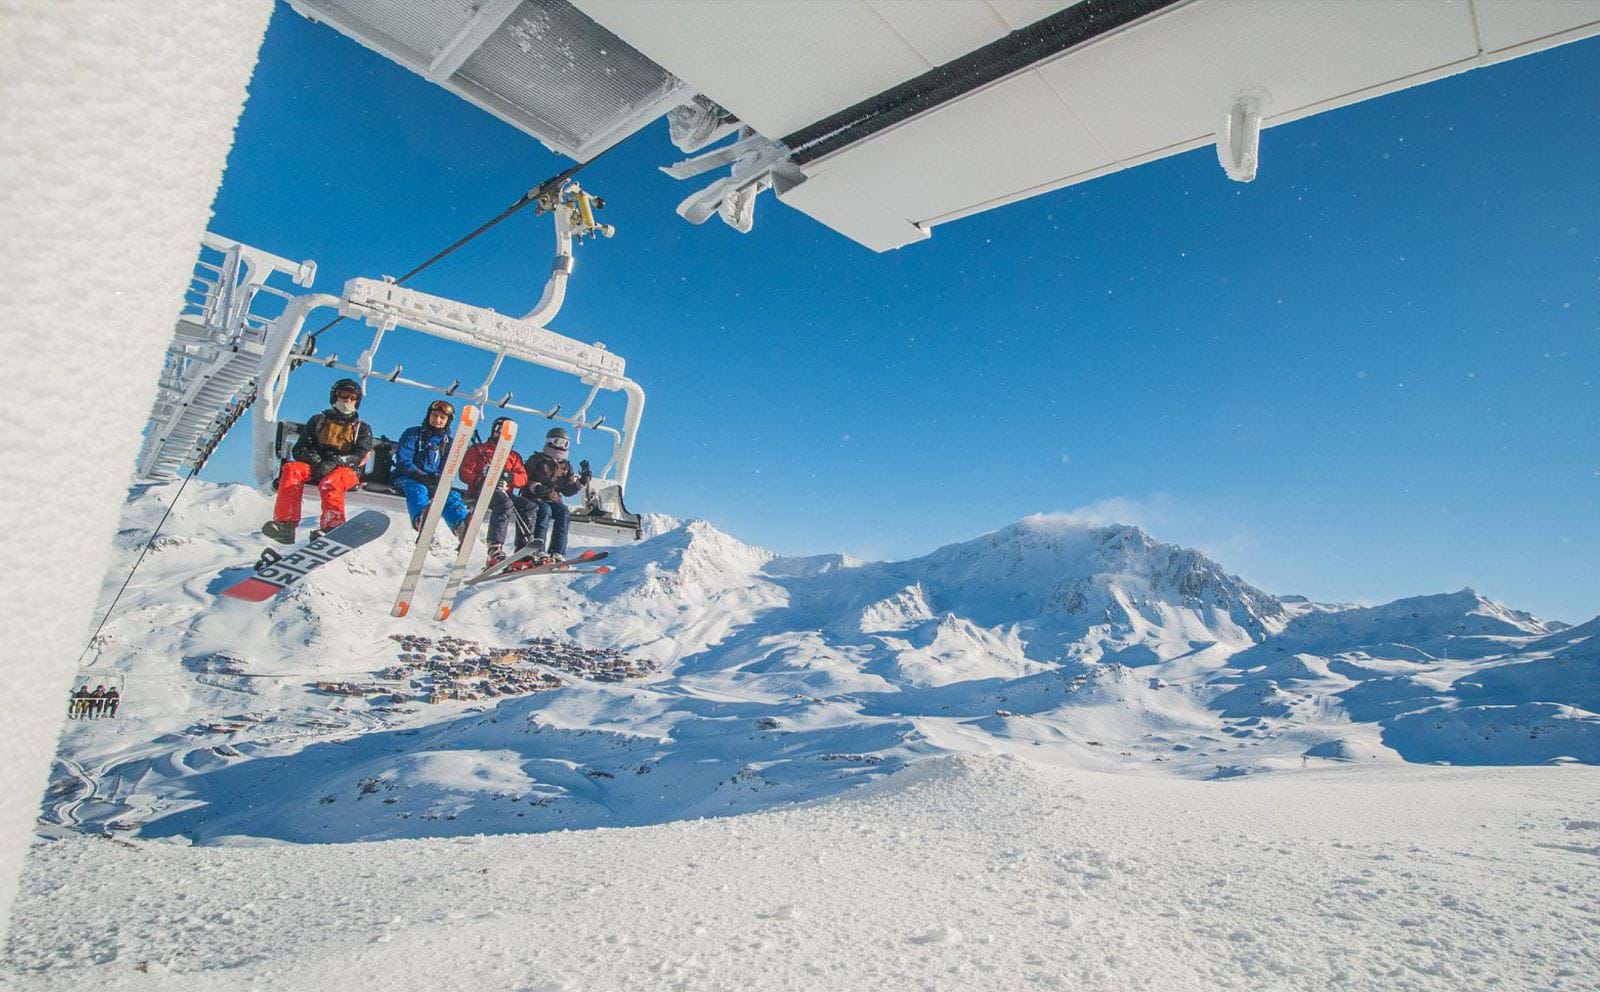 nortlander ski tours